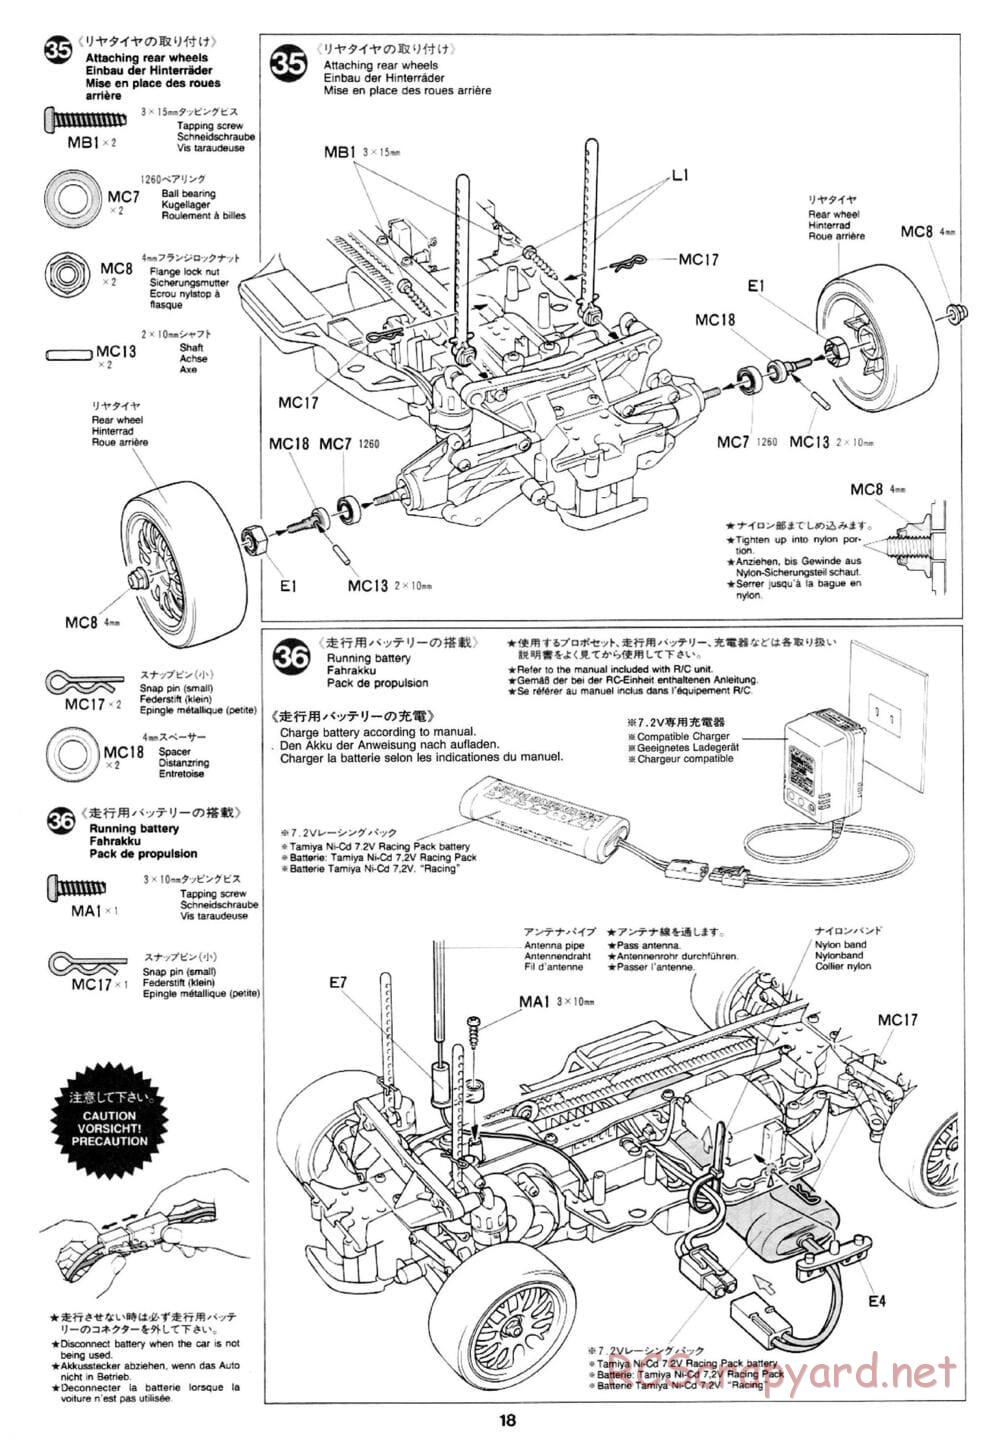 Tamiya - Mobil 1 NSX - TA-03R Chassis - Manual - Page 18